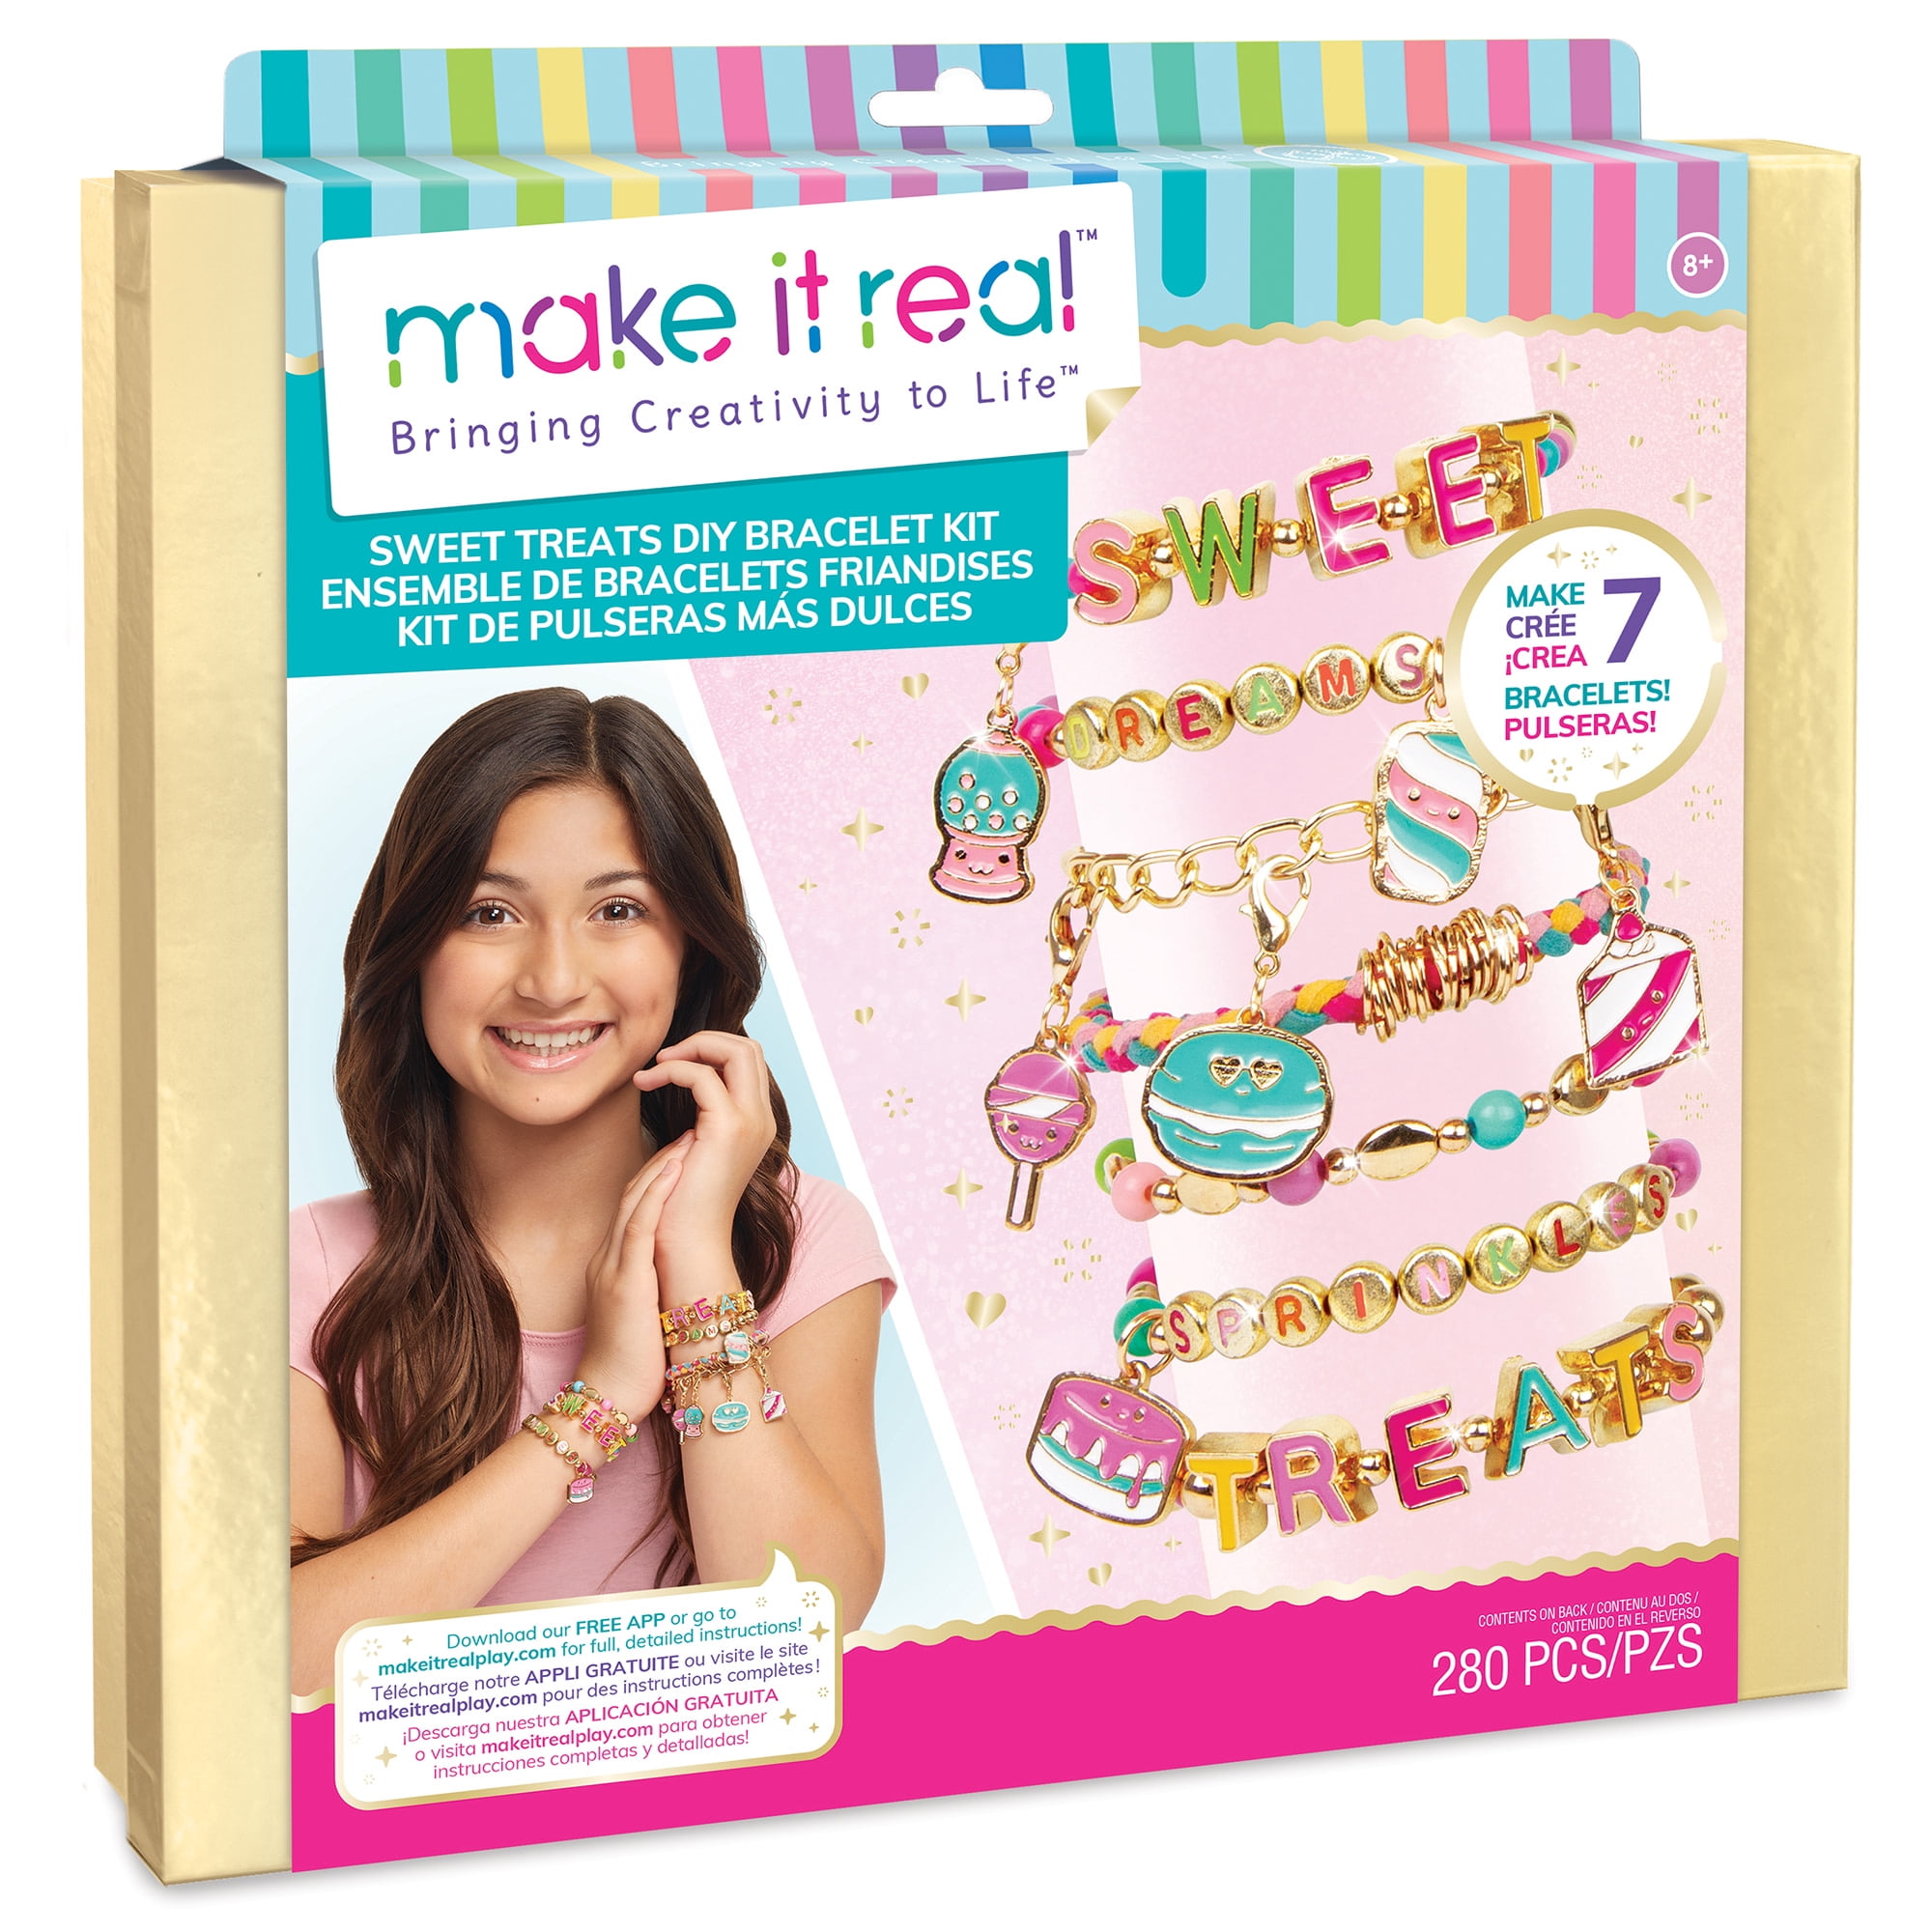 Make It Real: Rainbow DIY Bling Bracelets Kit - Create 5 Unique